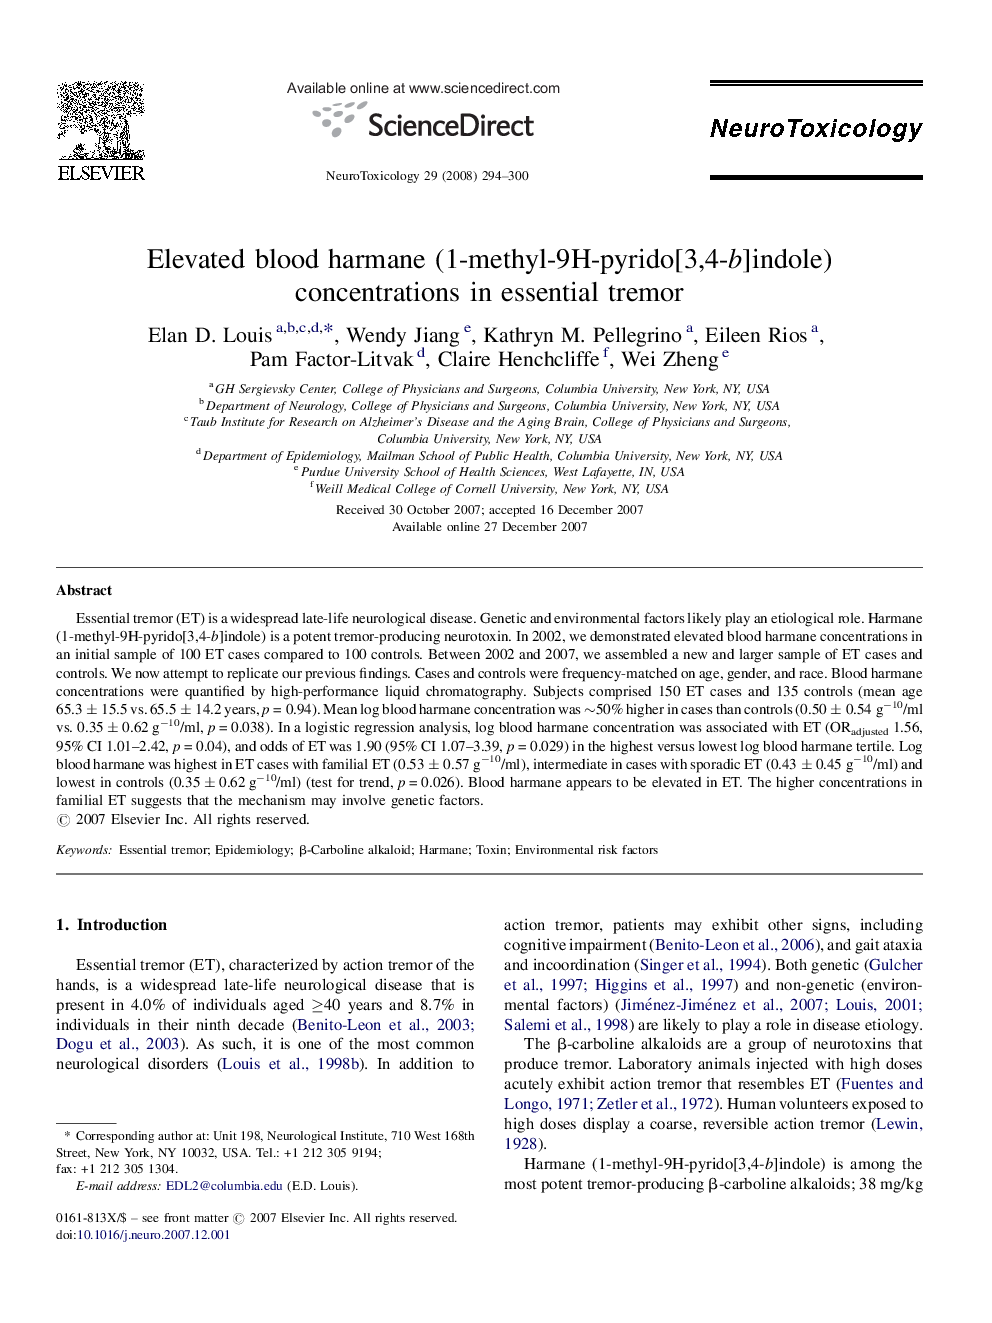 Elevated blood harmane (1-methyl-9H-pyrido[3,4-b]indole) concentrations in essential tremor